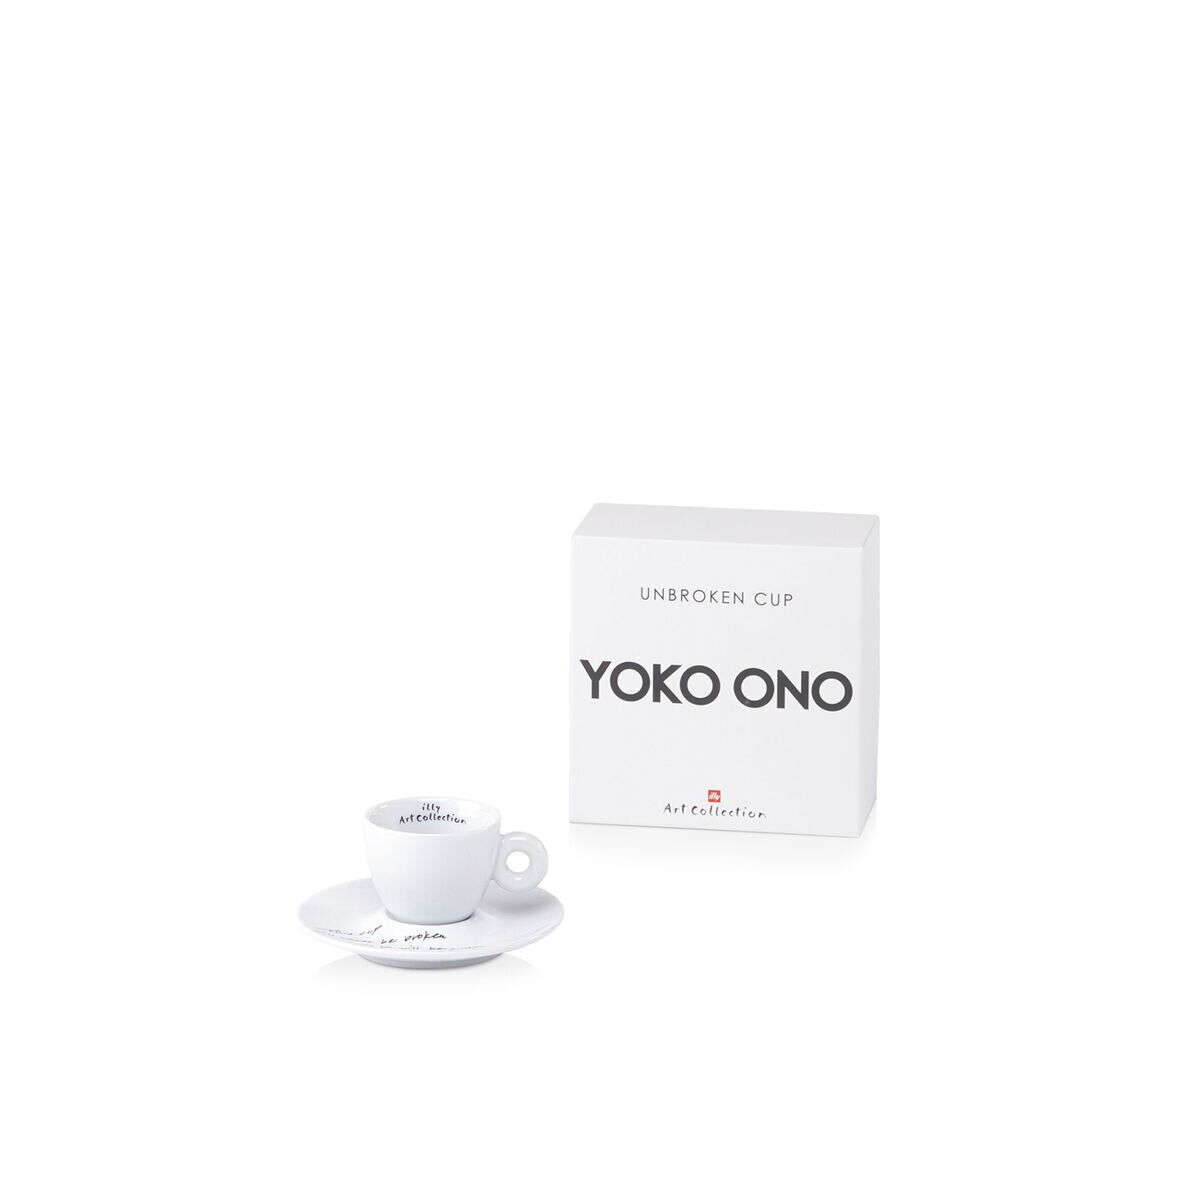 TASSE INTACTE de Yoko Ono illy – Une tasse à espresso de 3 oz